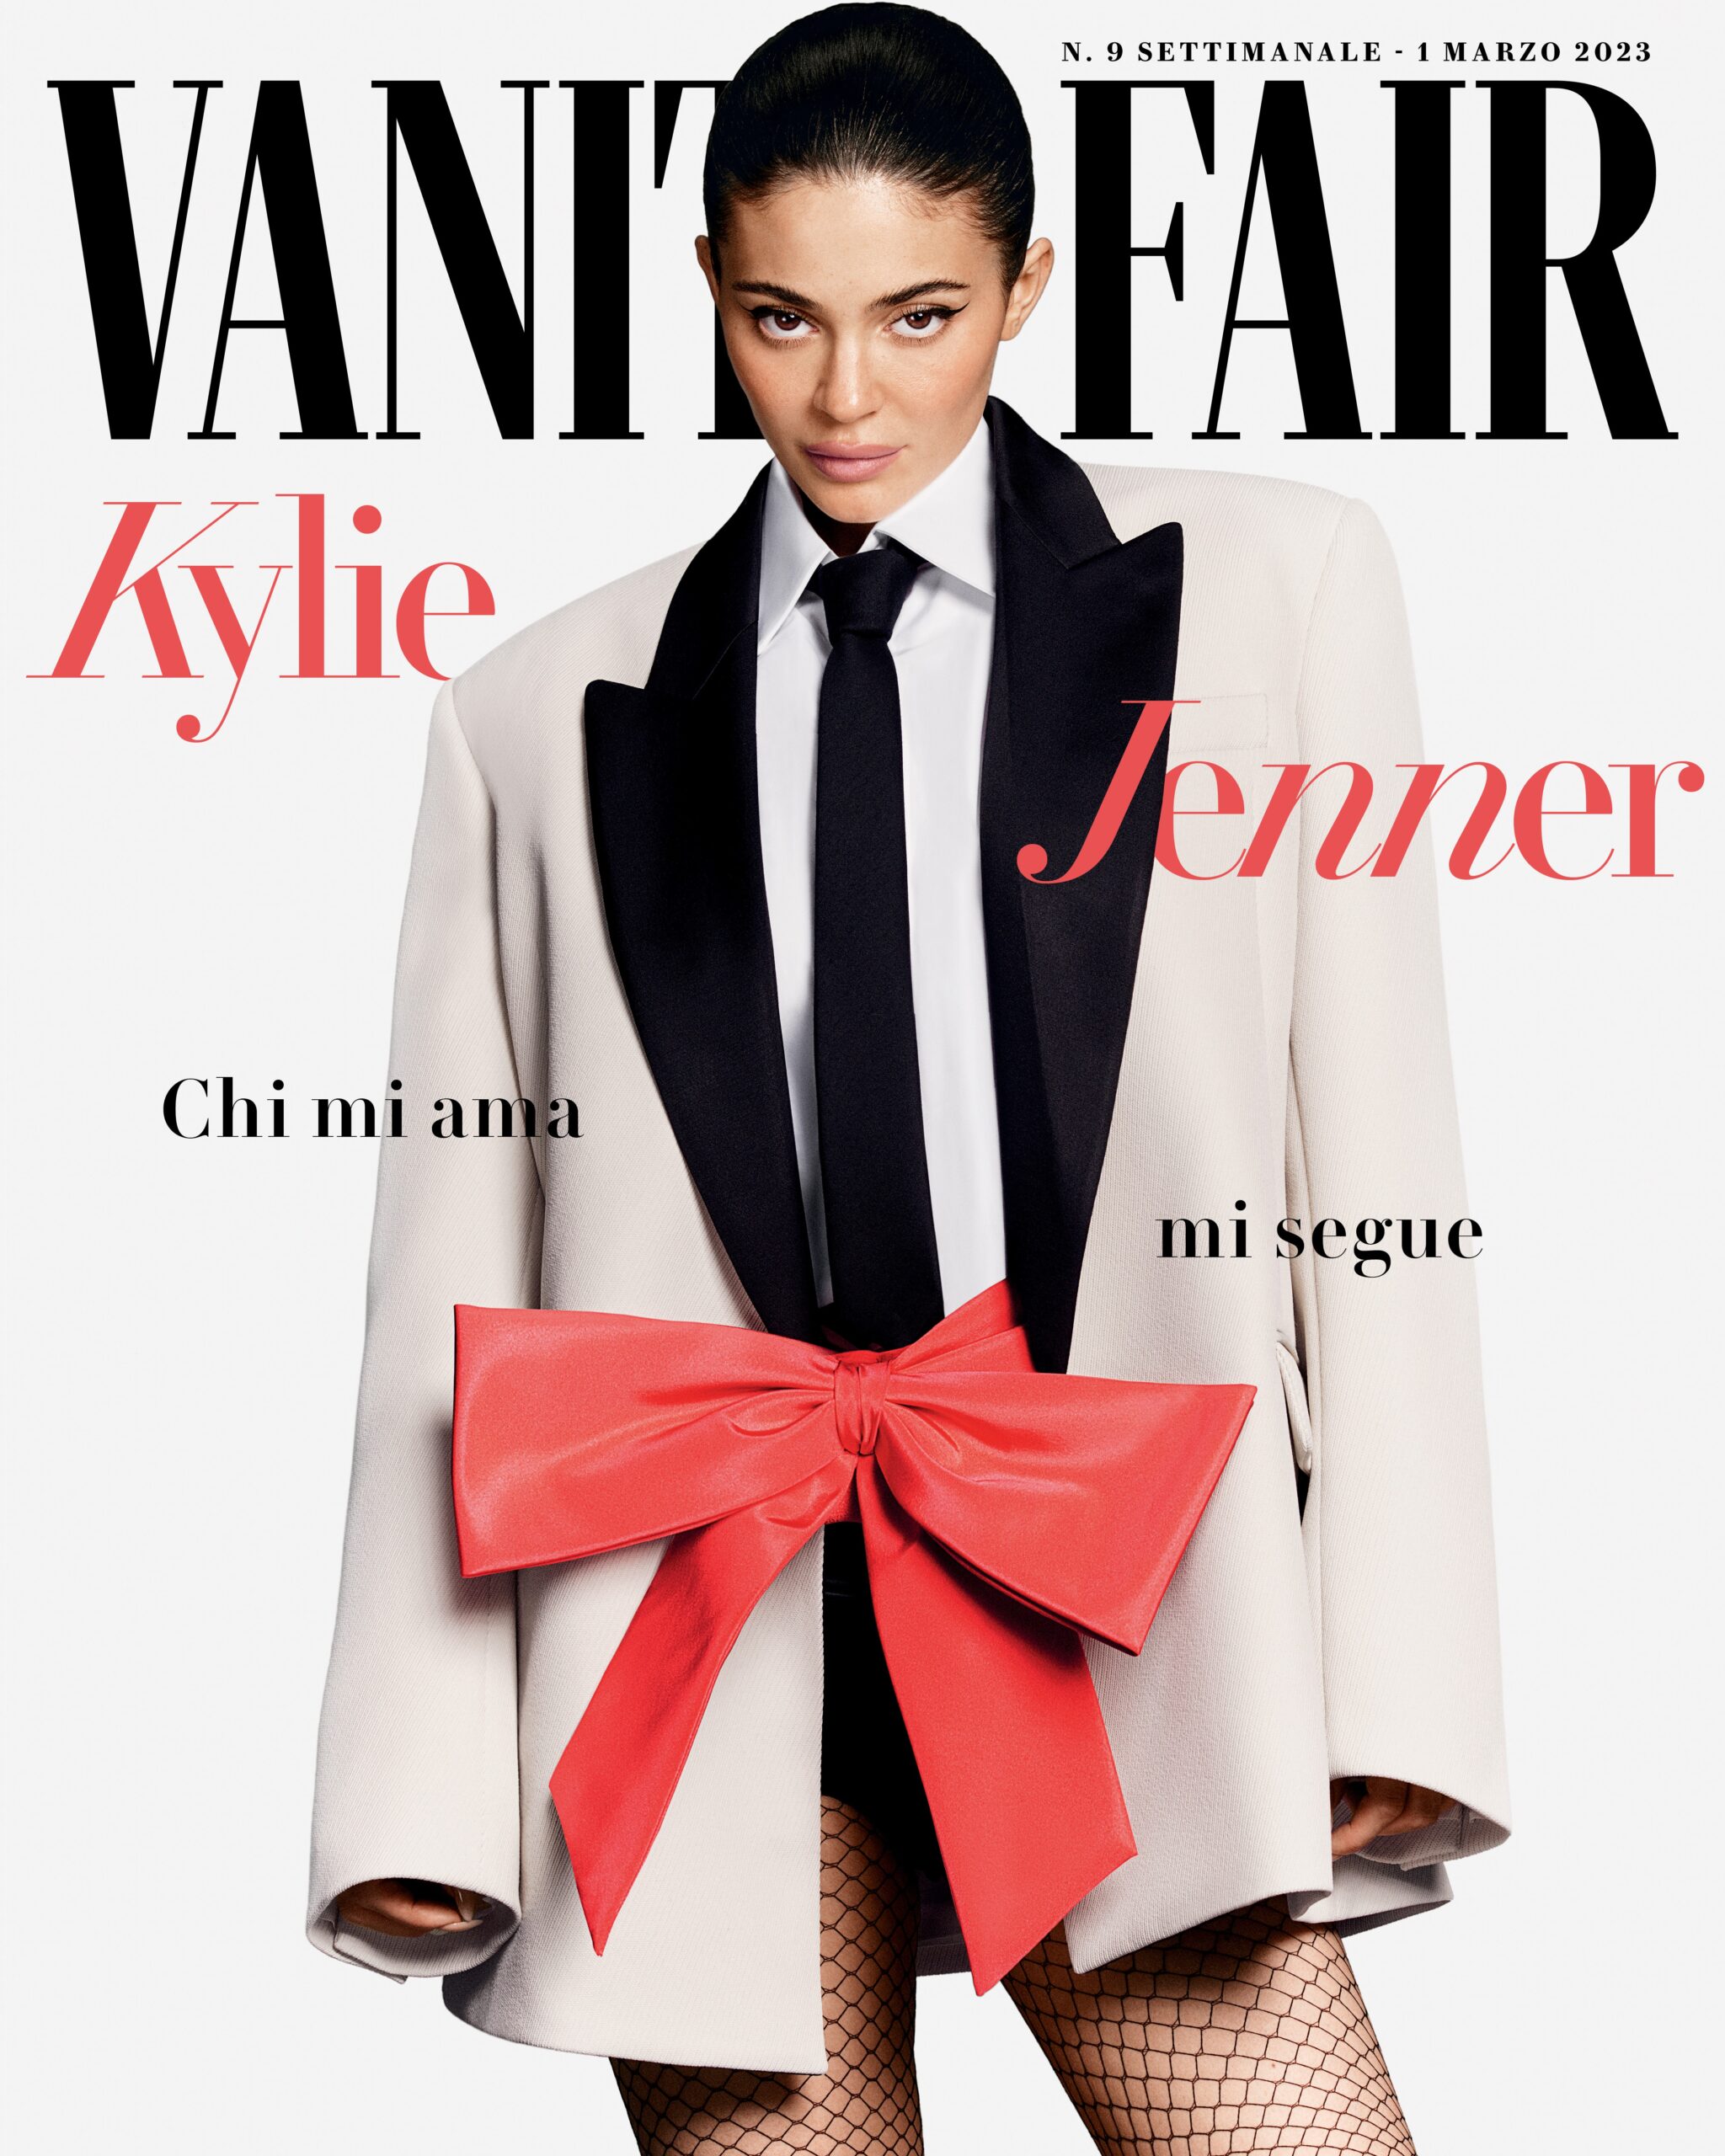 kylie-jenner-si-racconta-in-esclusiva-a-vanity-fair-italia